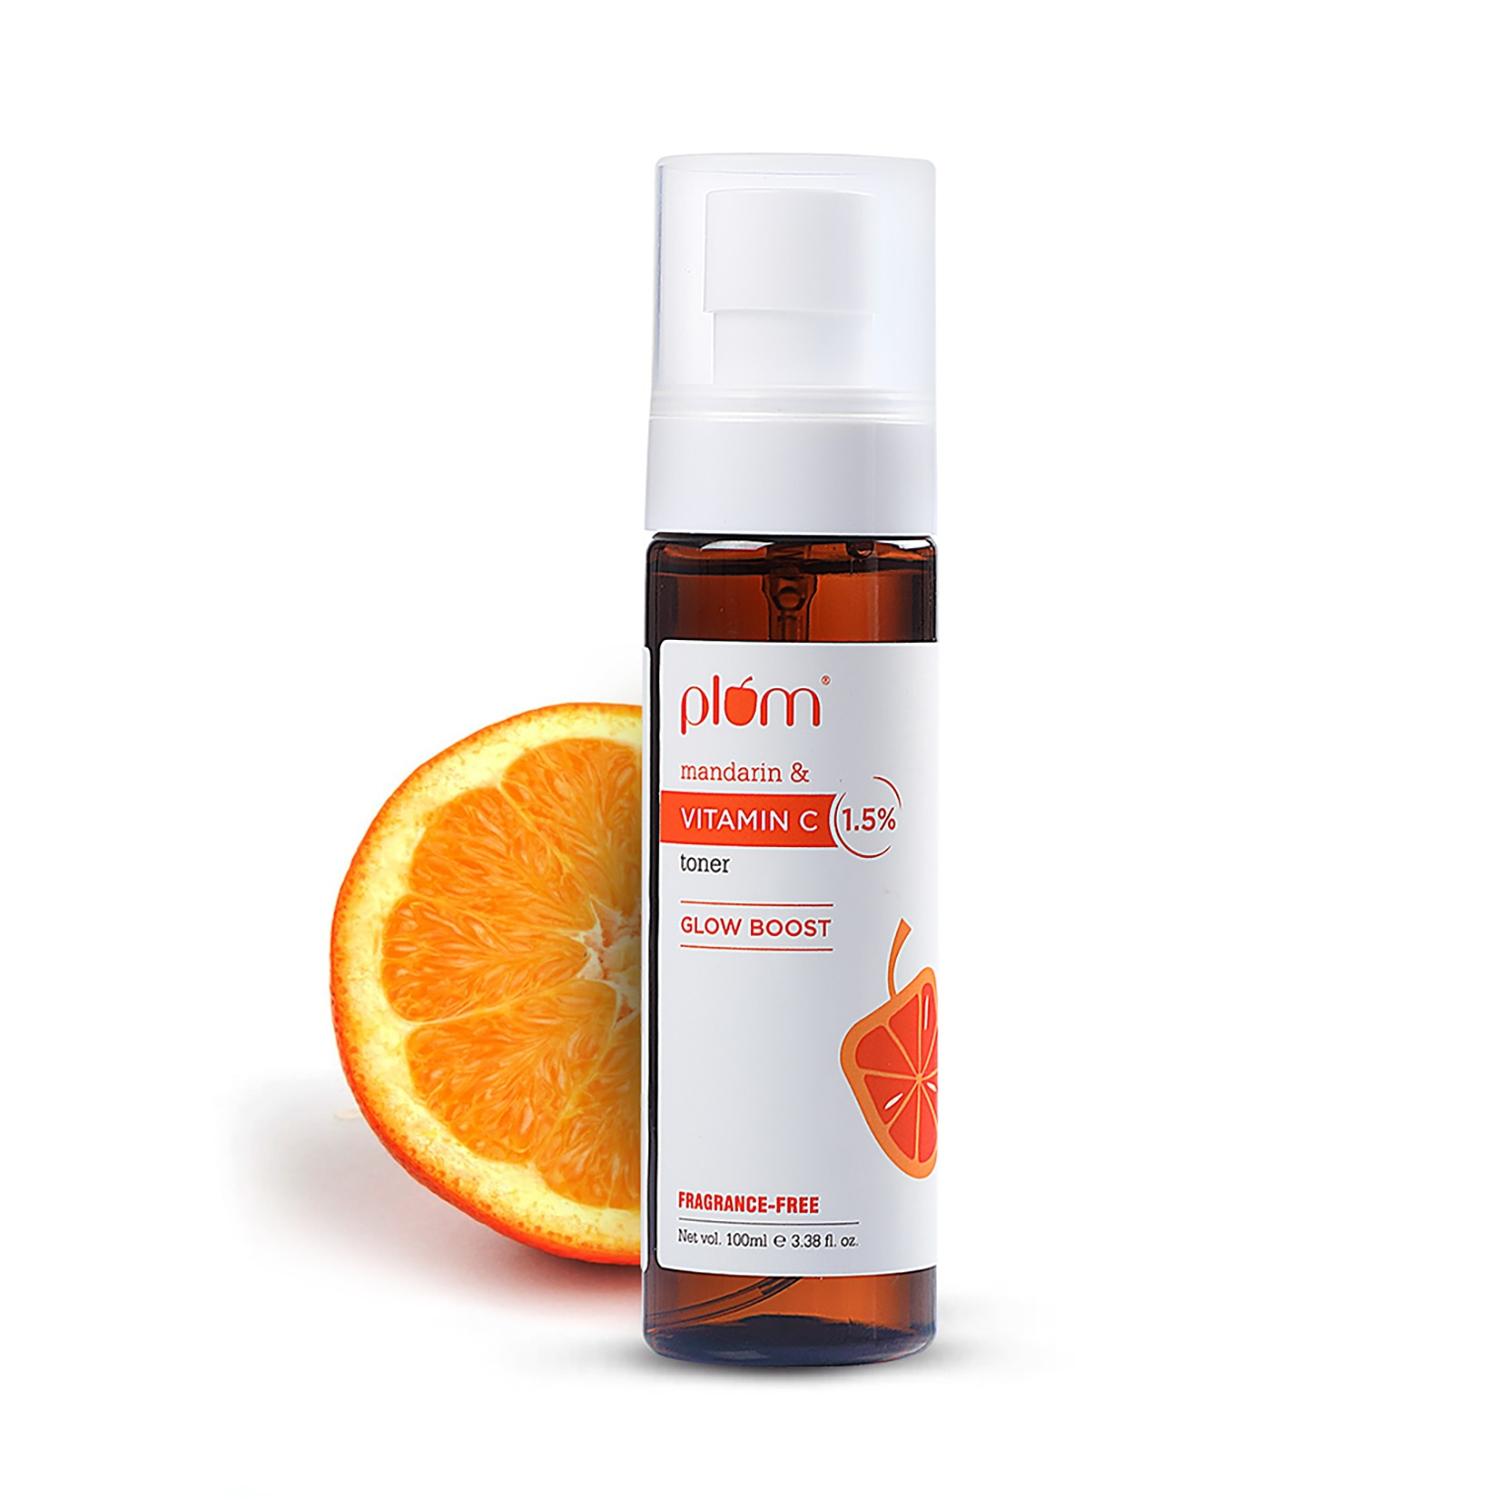 plum 1.5% vitamin c alcohol-free toner-mandarin & witch hazel for glow boost & open pores (100ml)